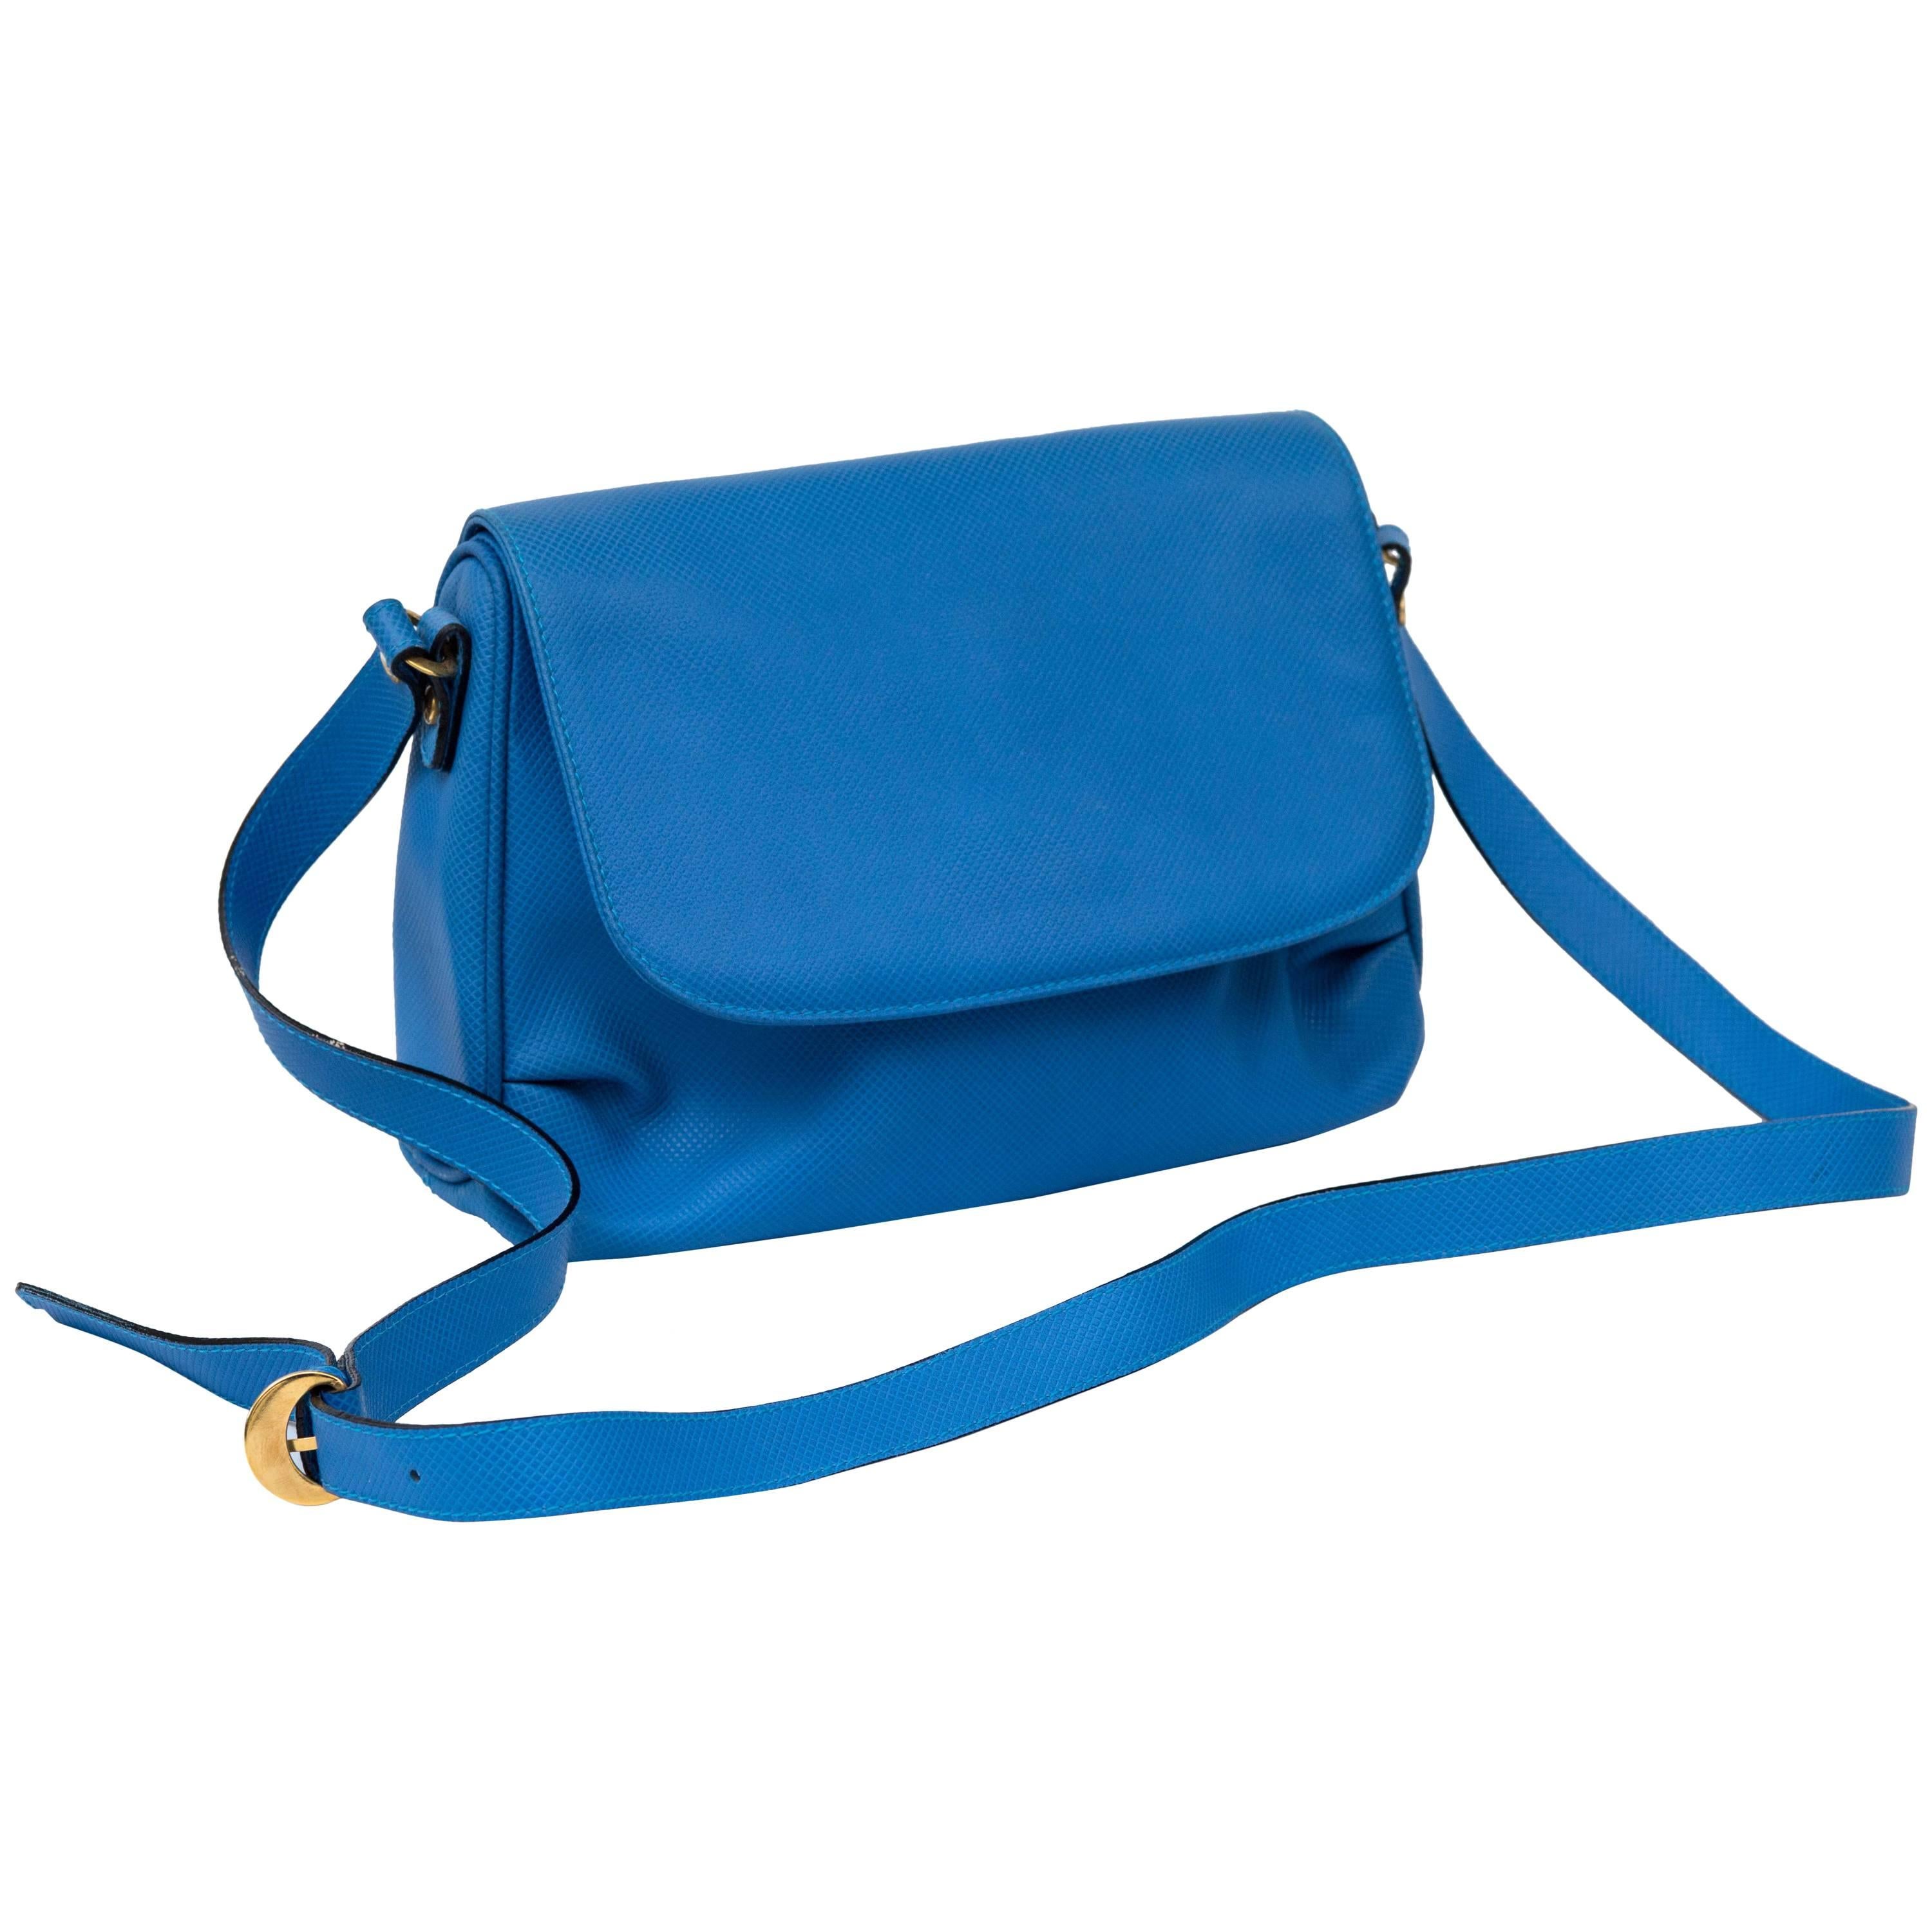 Cyan Blue Bottega Veneta Made in Italy Handbag, Simple Elegance